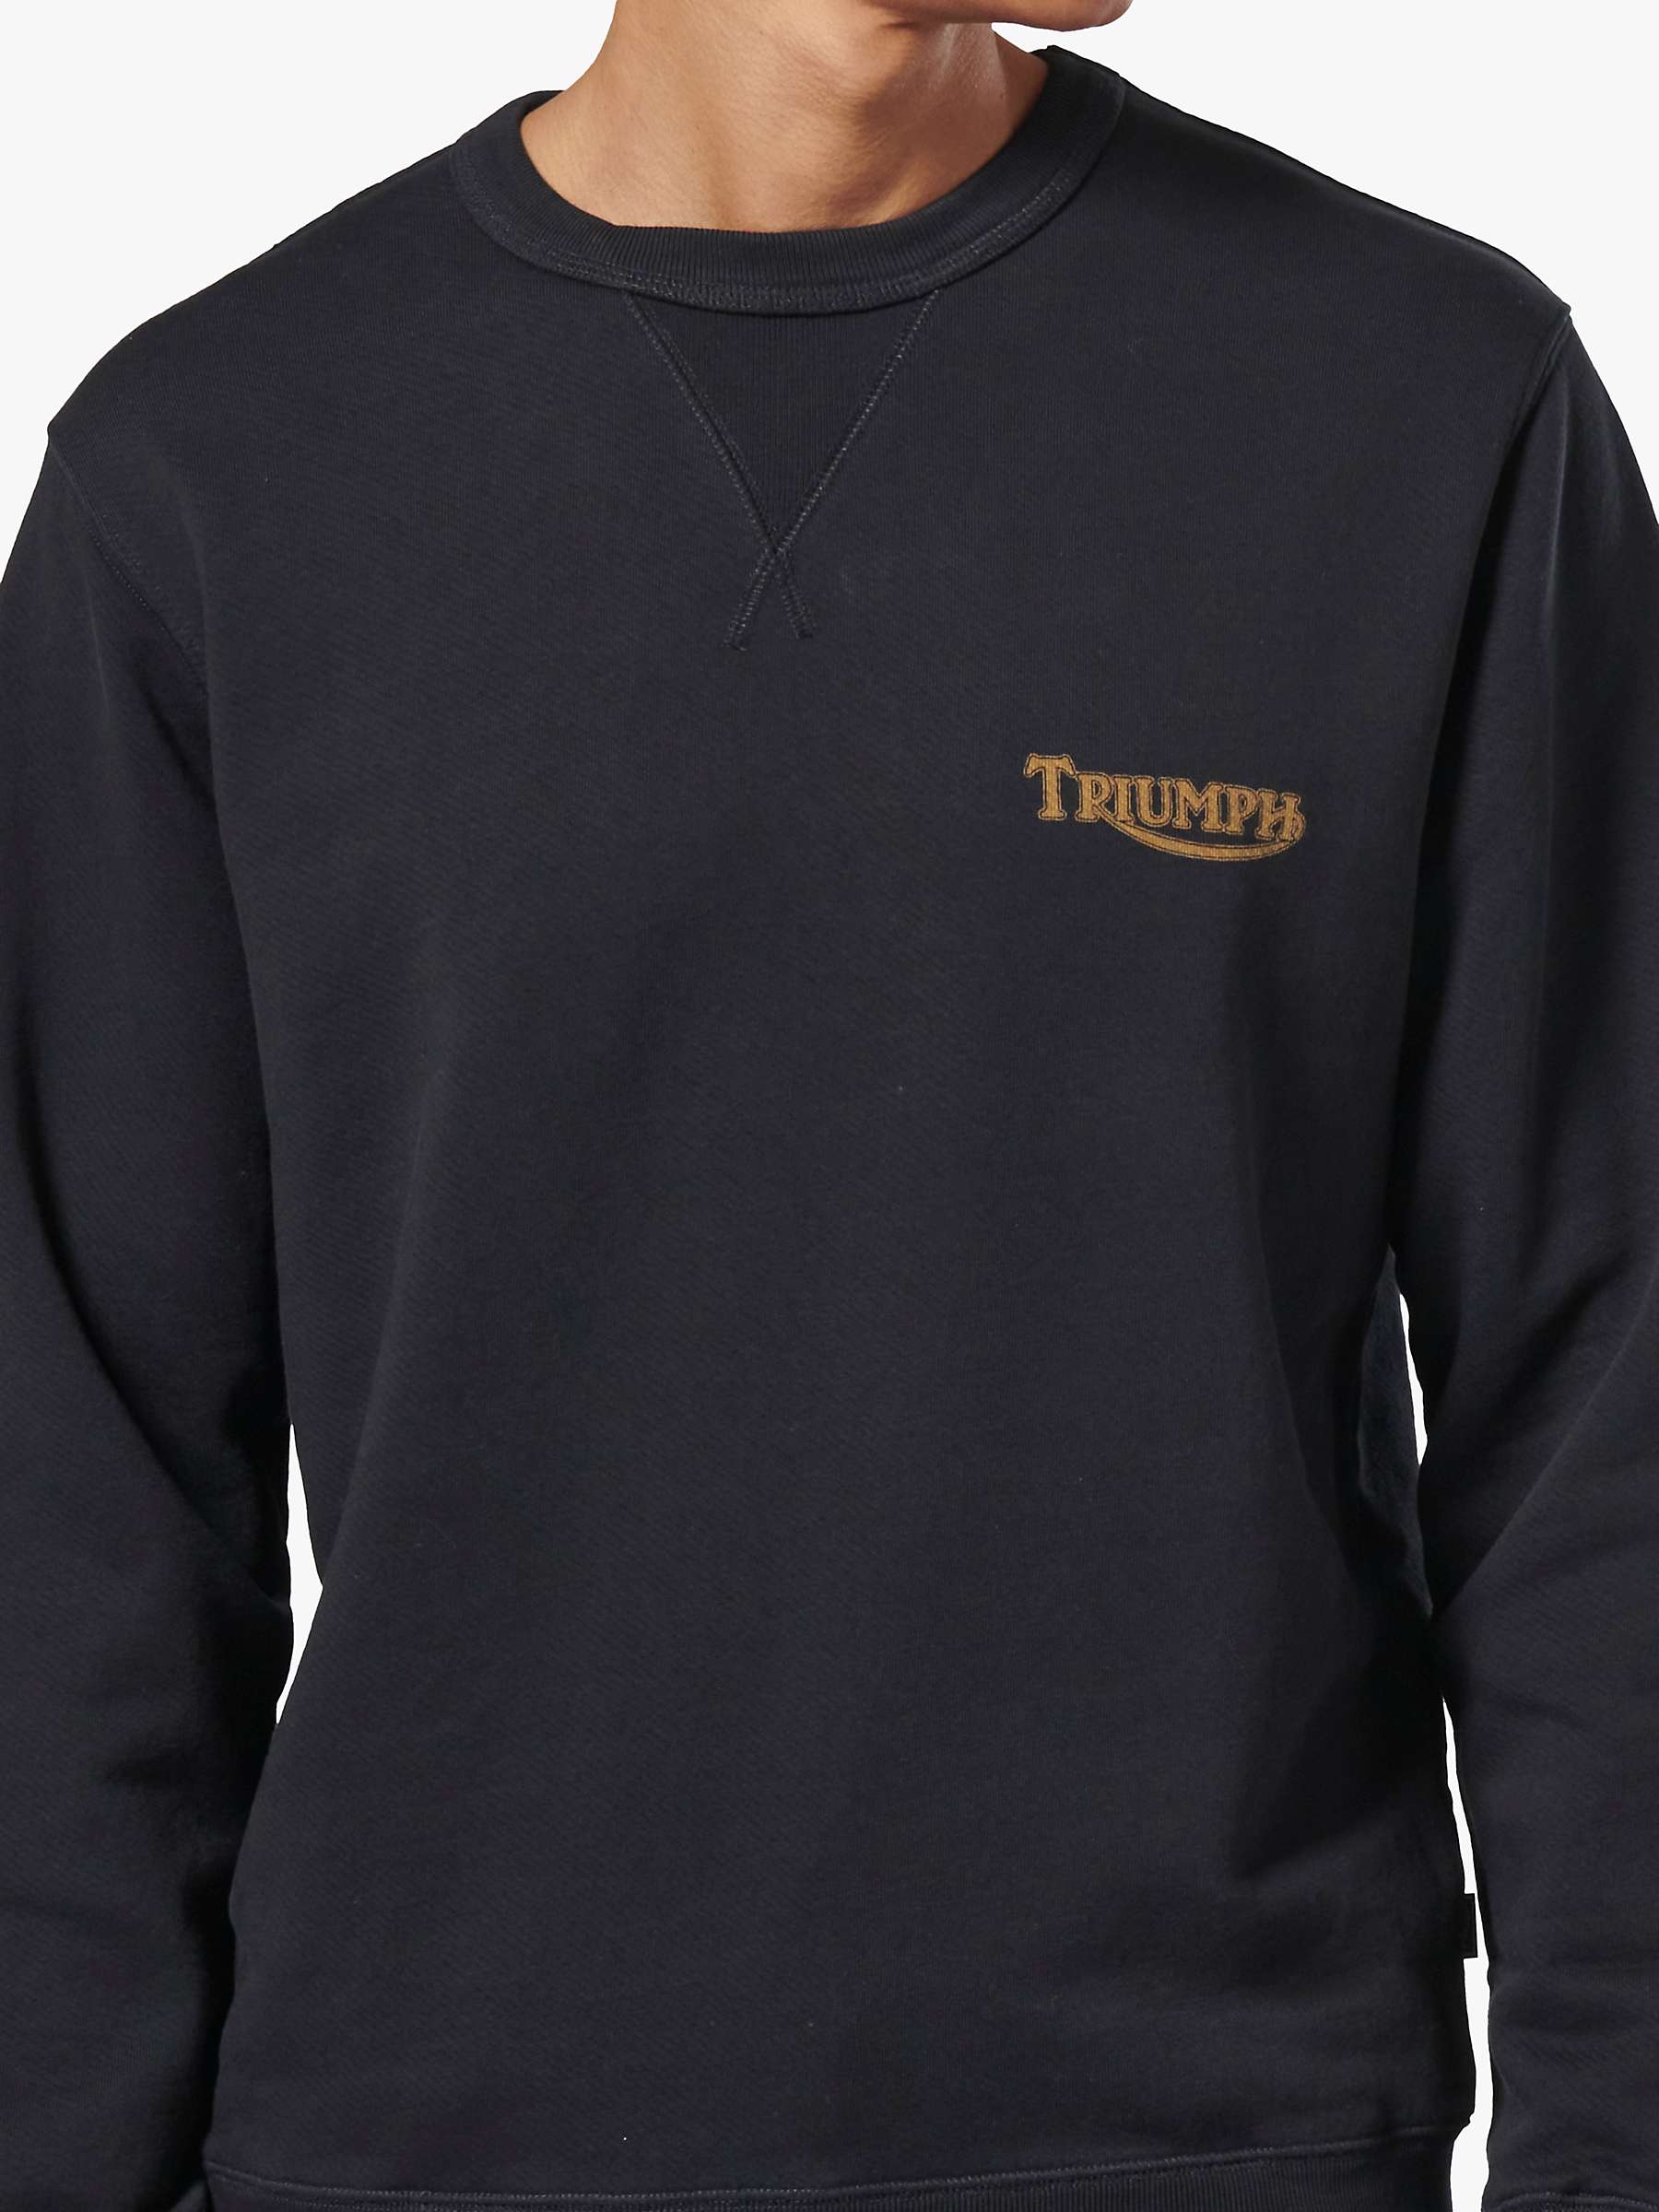 Buy Triumph Motorcycles Circuit Sweatshirt Online at johnlewis.com